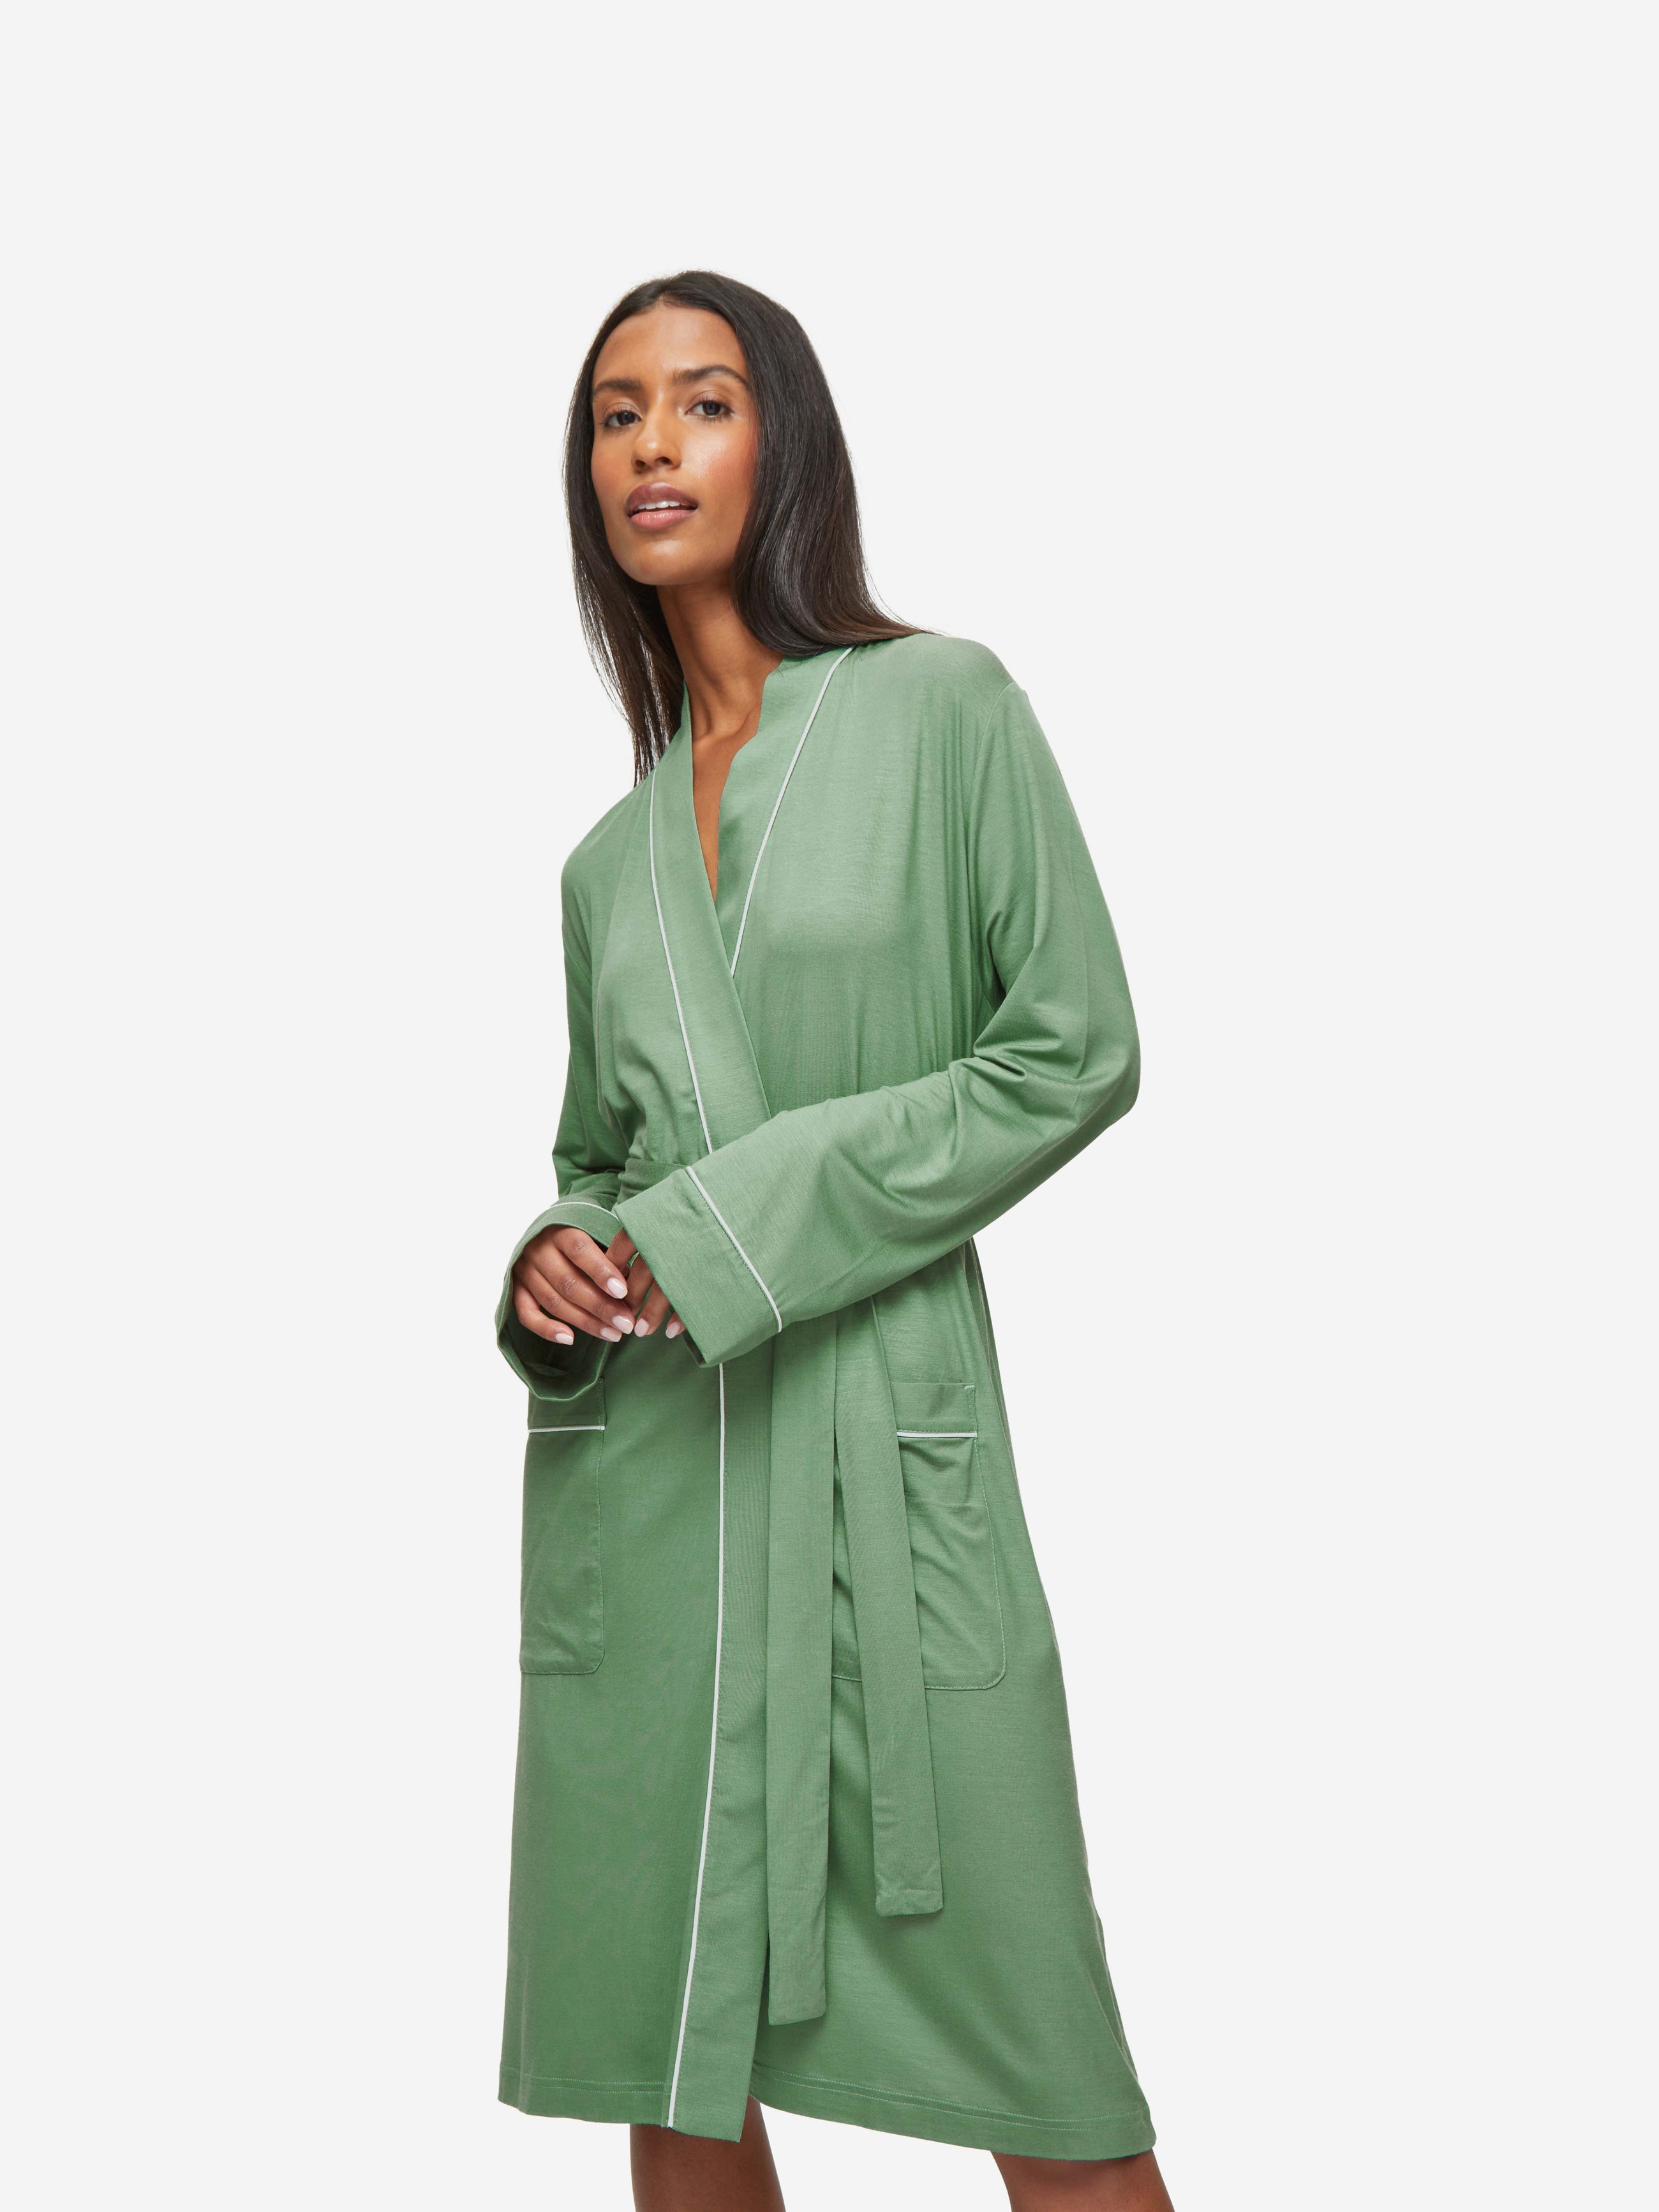 Men's Dressing Gown Dark Brown Green Paisley With Gold Details | Baturina  Homewear